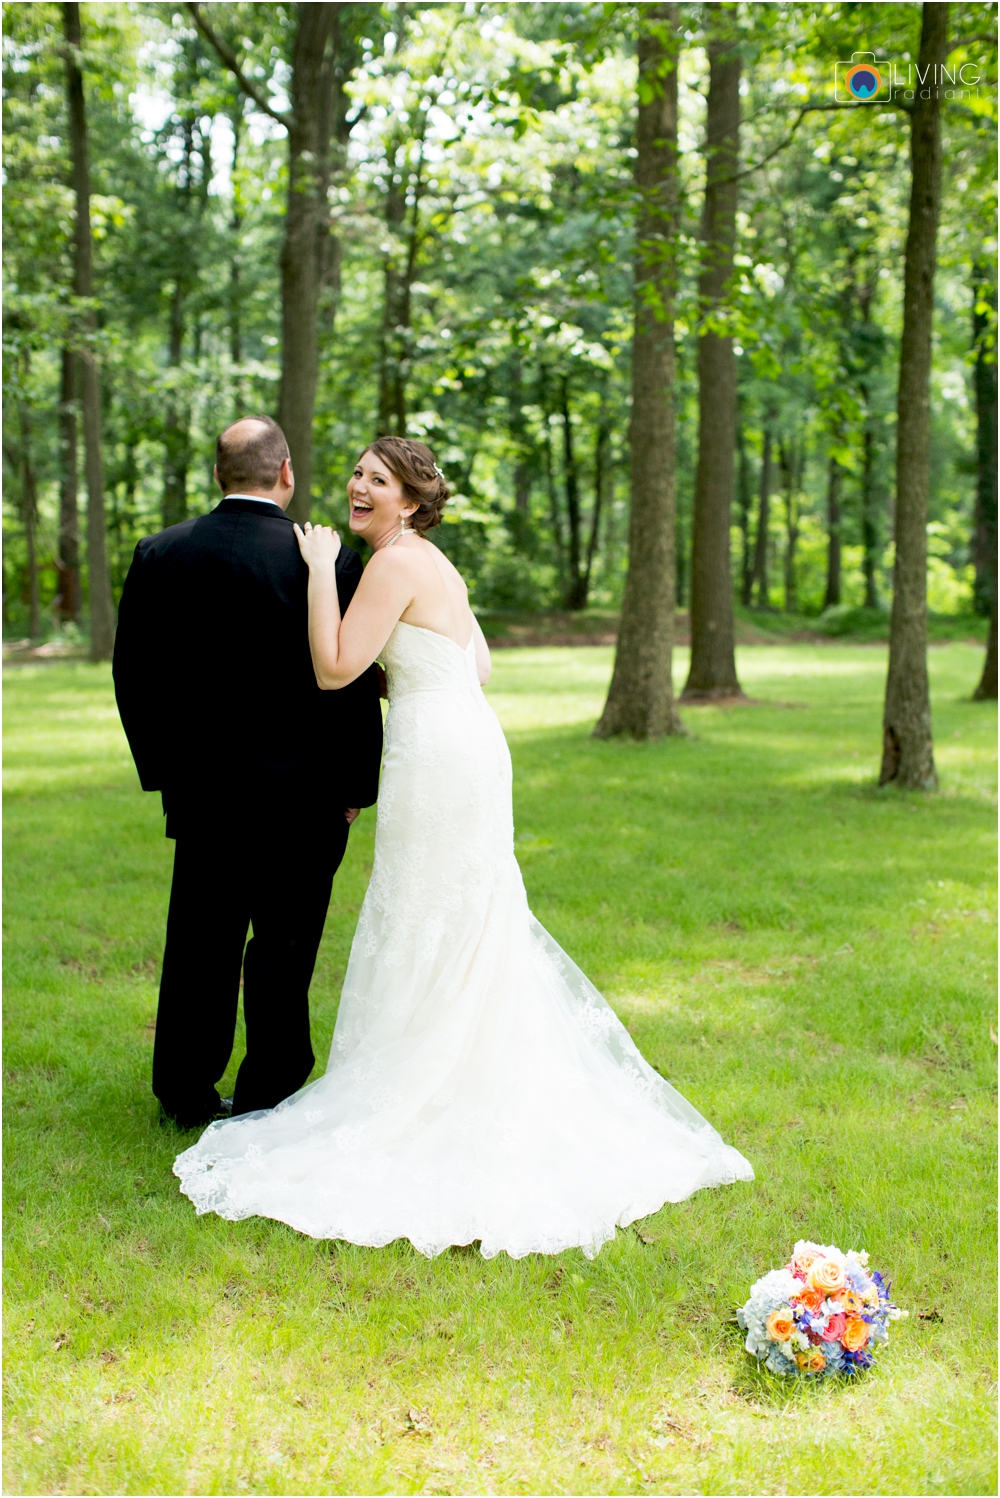 Jarrettsville-Gardens-Pennsylvania-Weddings-Living-Radiant-Photography-outdoor-church-wedding-photos_0066.jpg